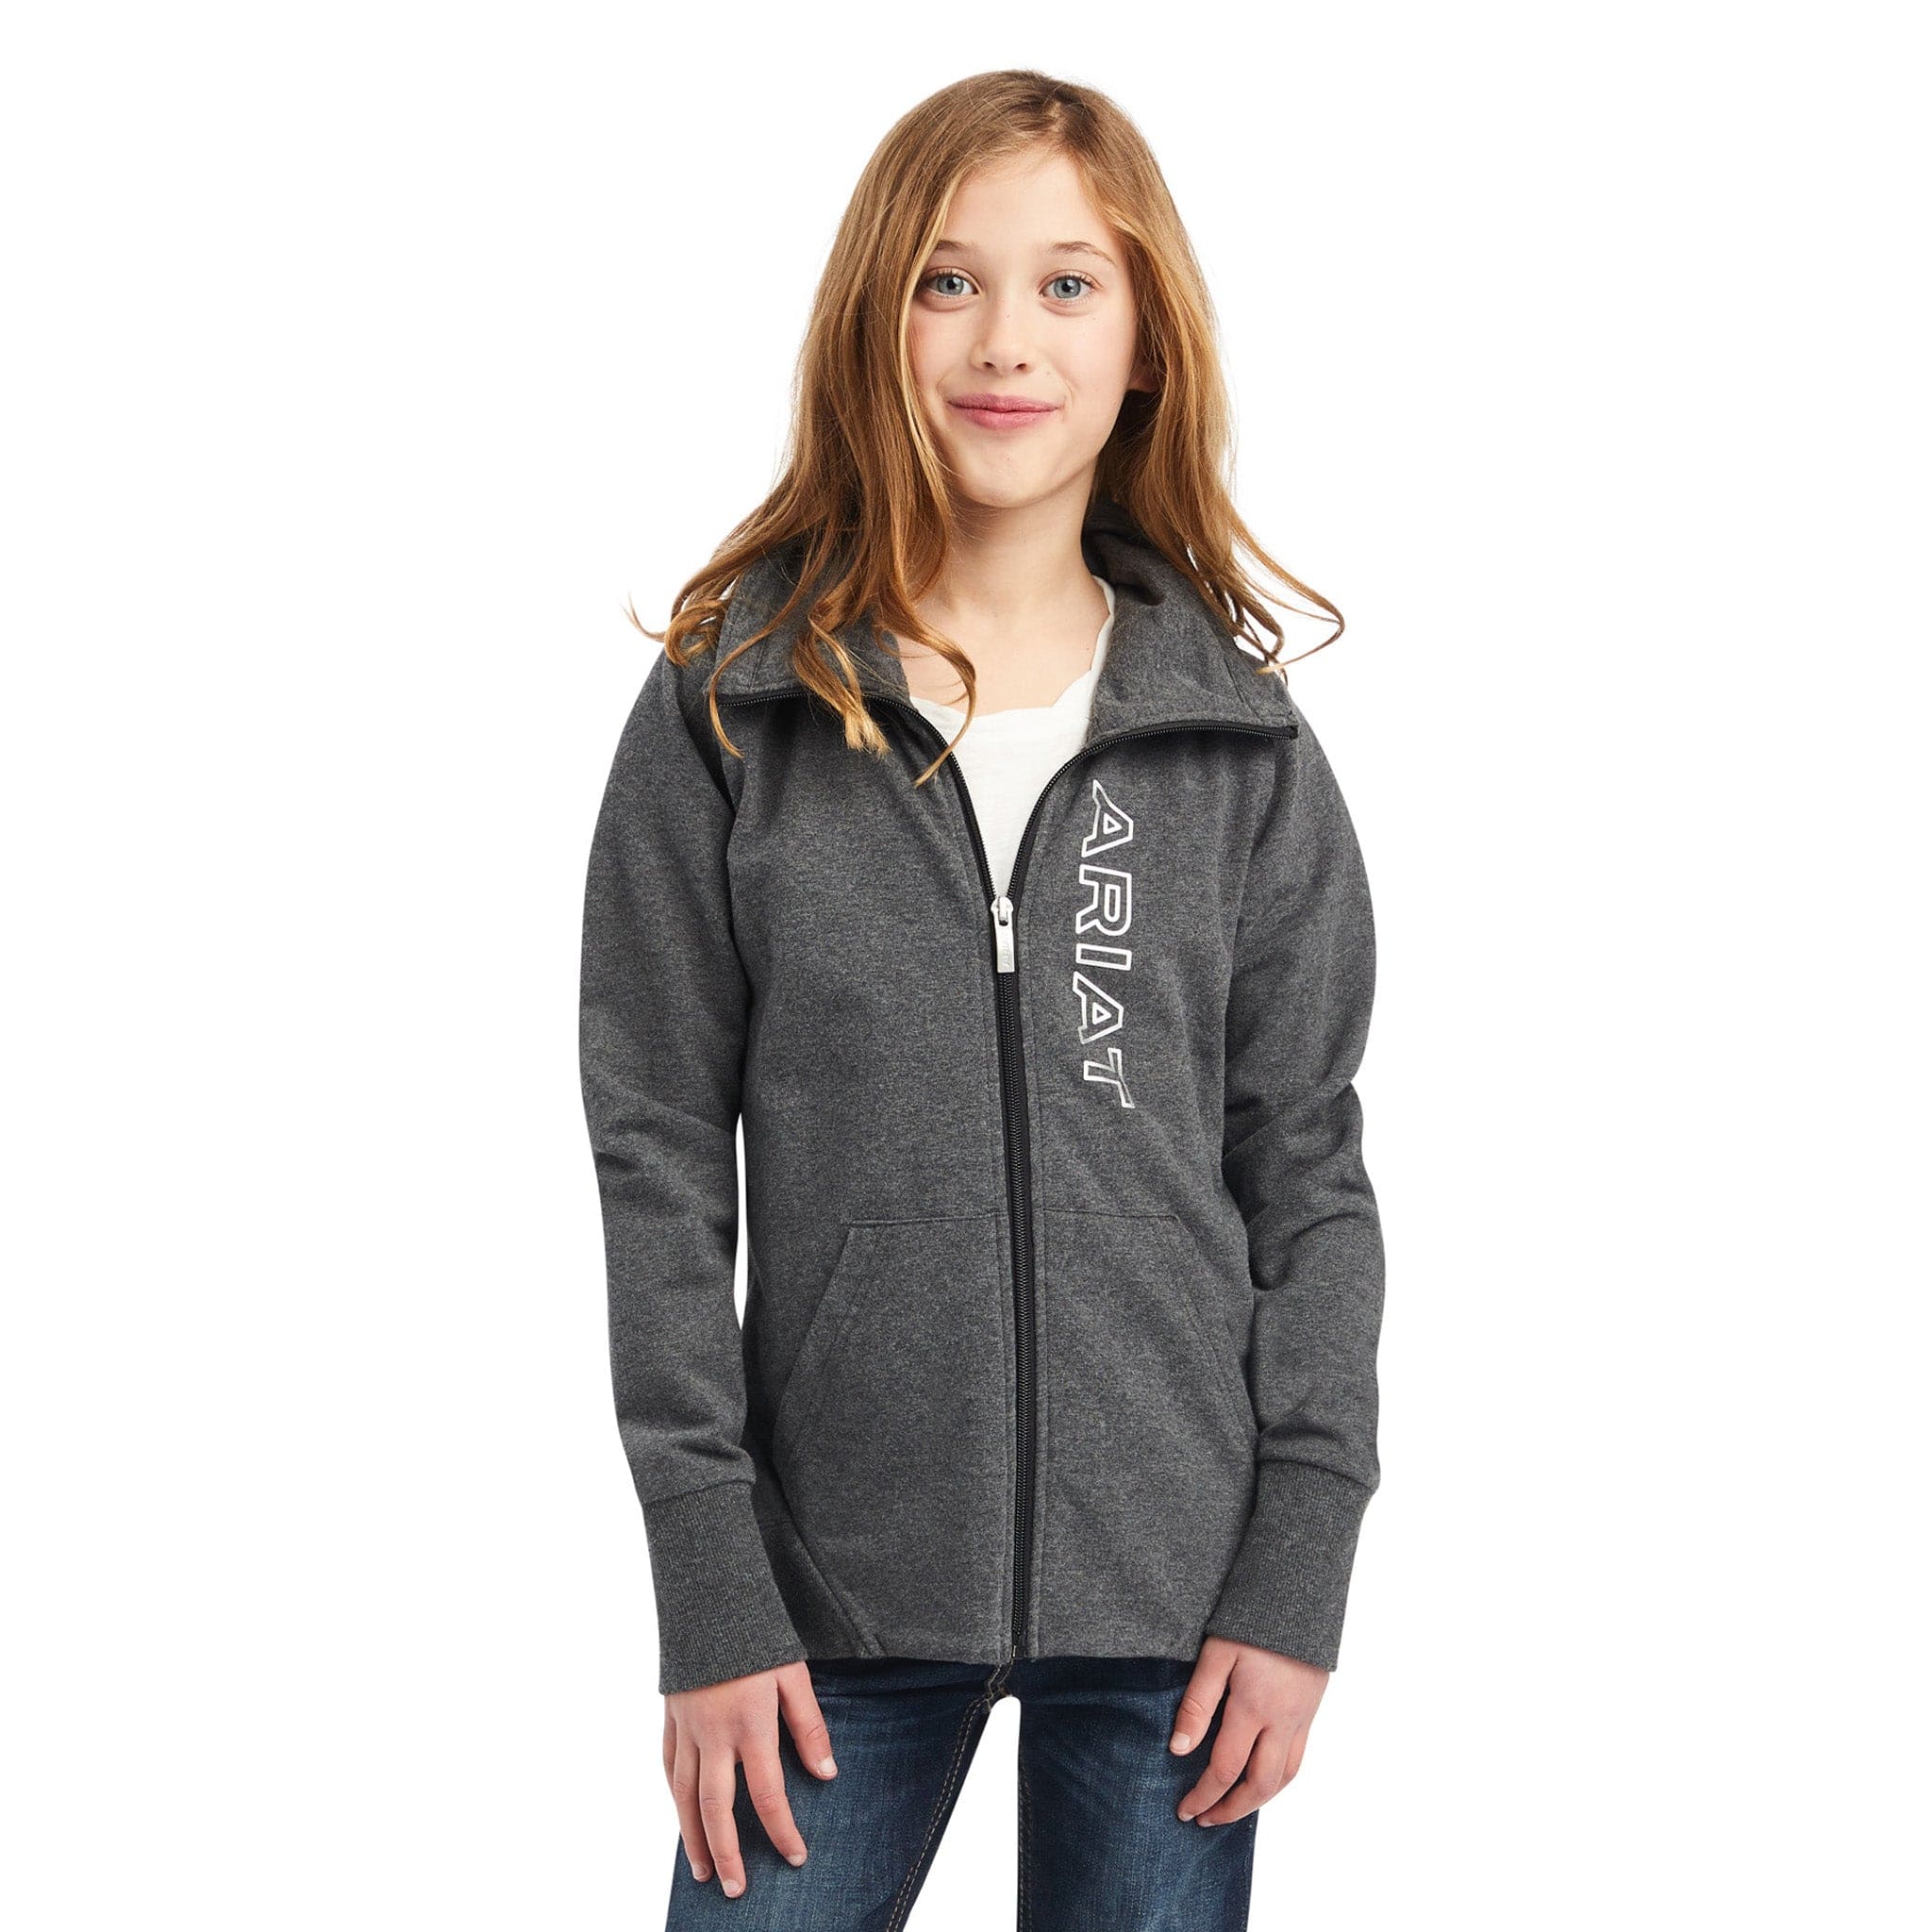 Ariat Youth Team Full Zip Sweatshirt Charcoal Grey 10041370 Front On Model